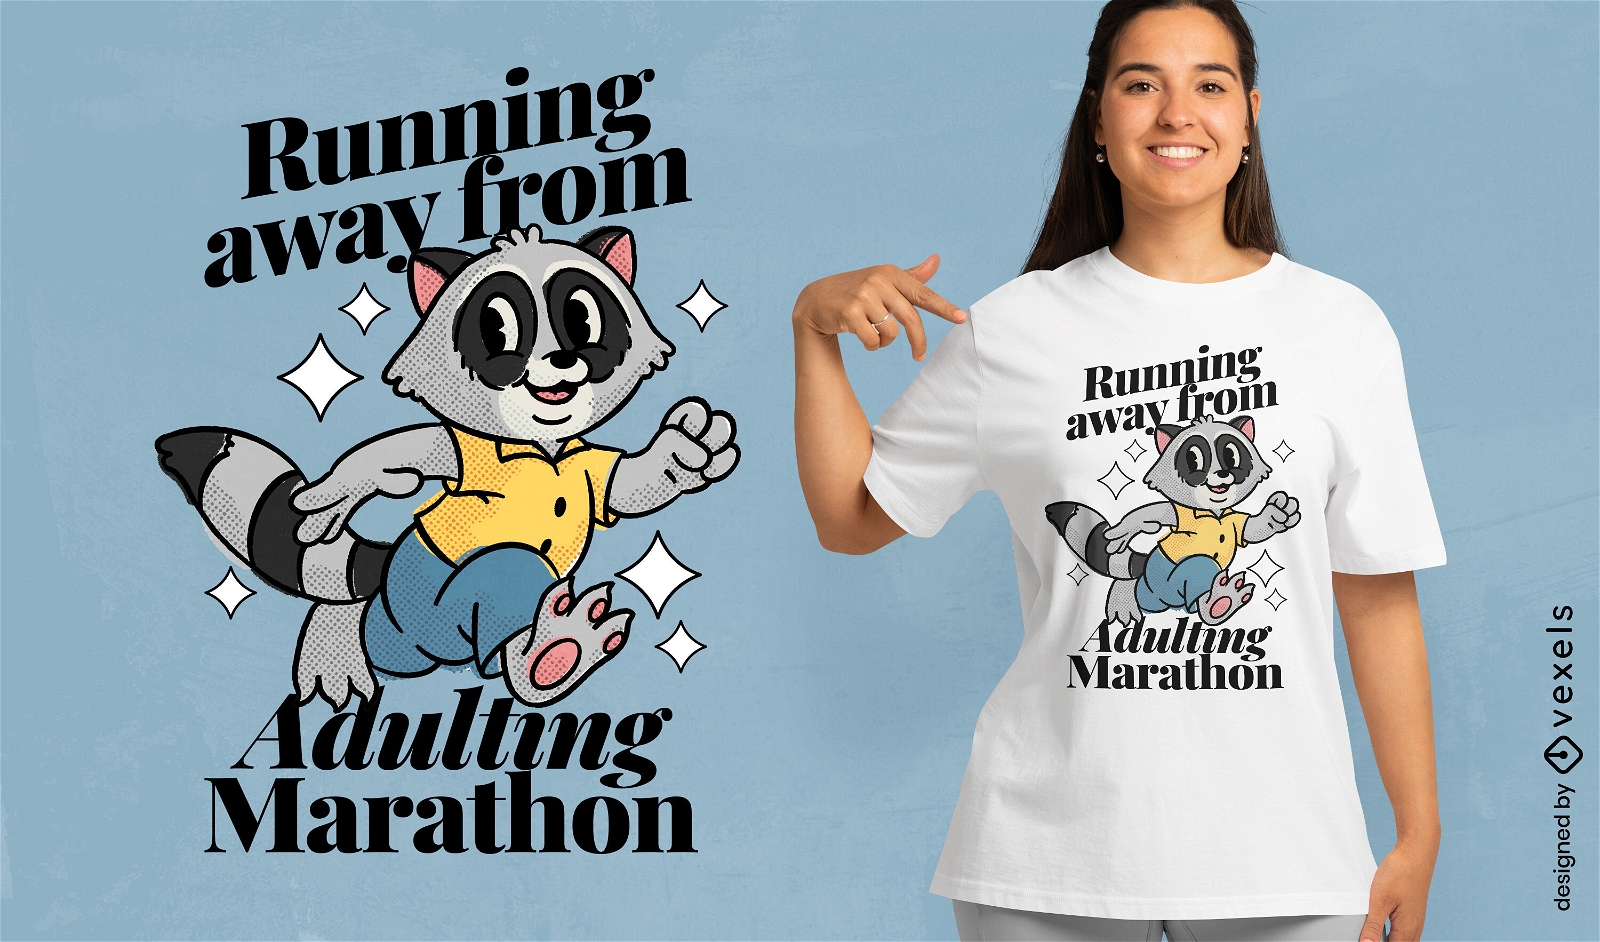 Adulting marathon t-shirt design